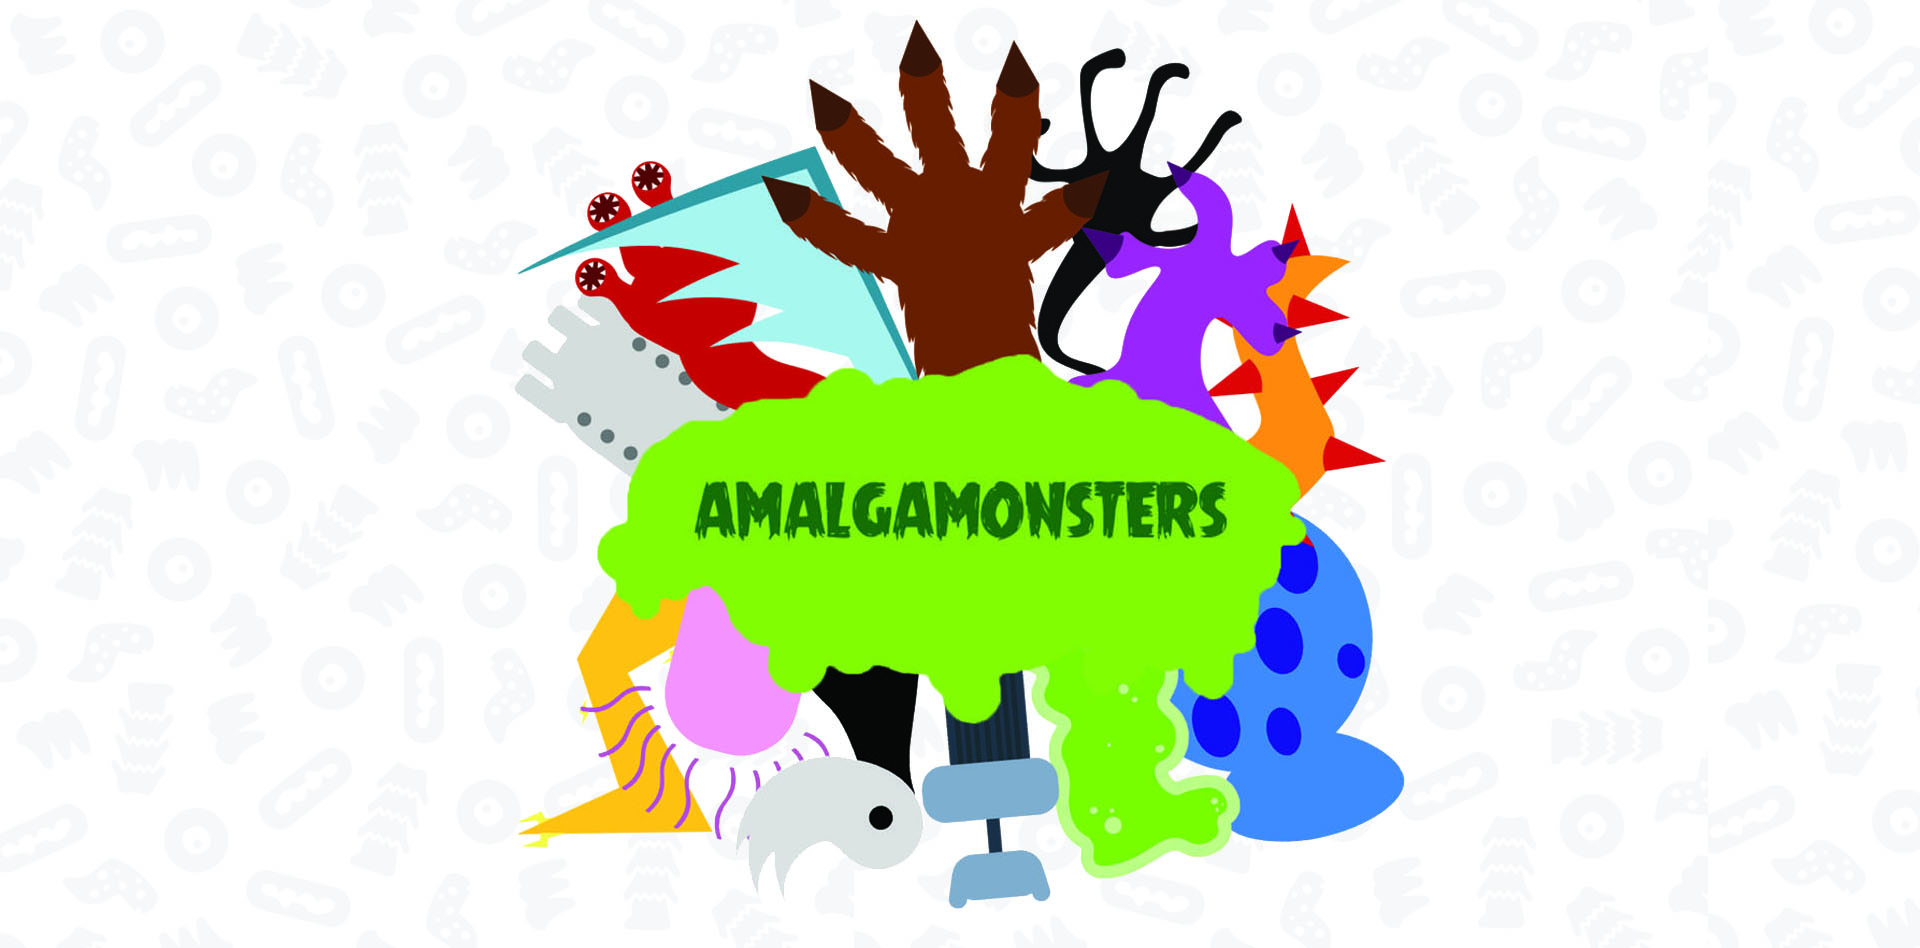 Amalgamonsters